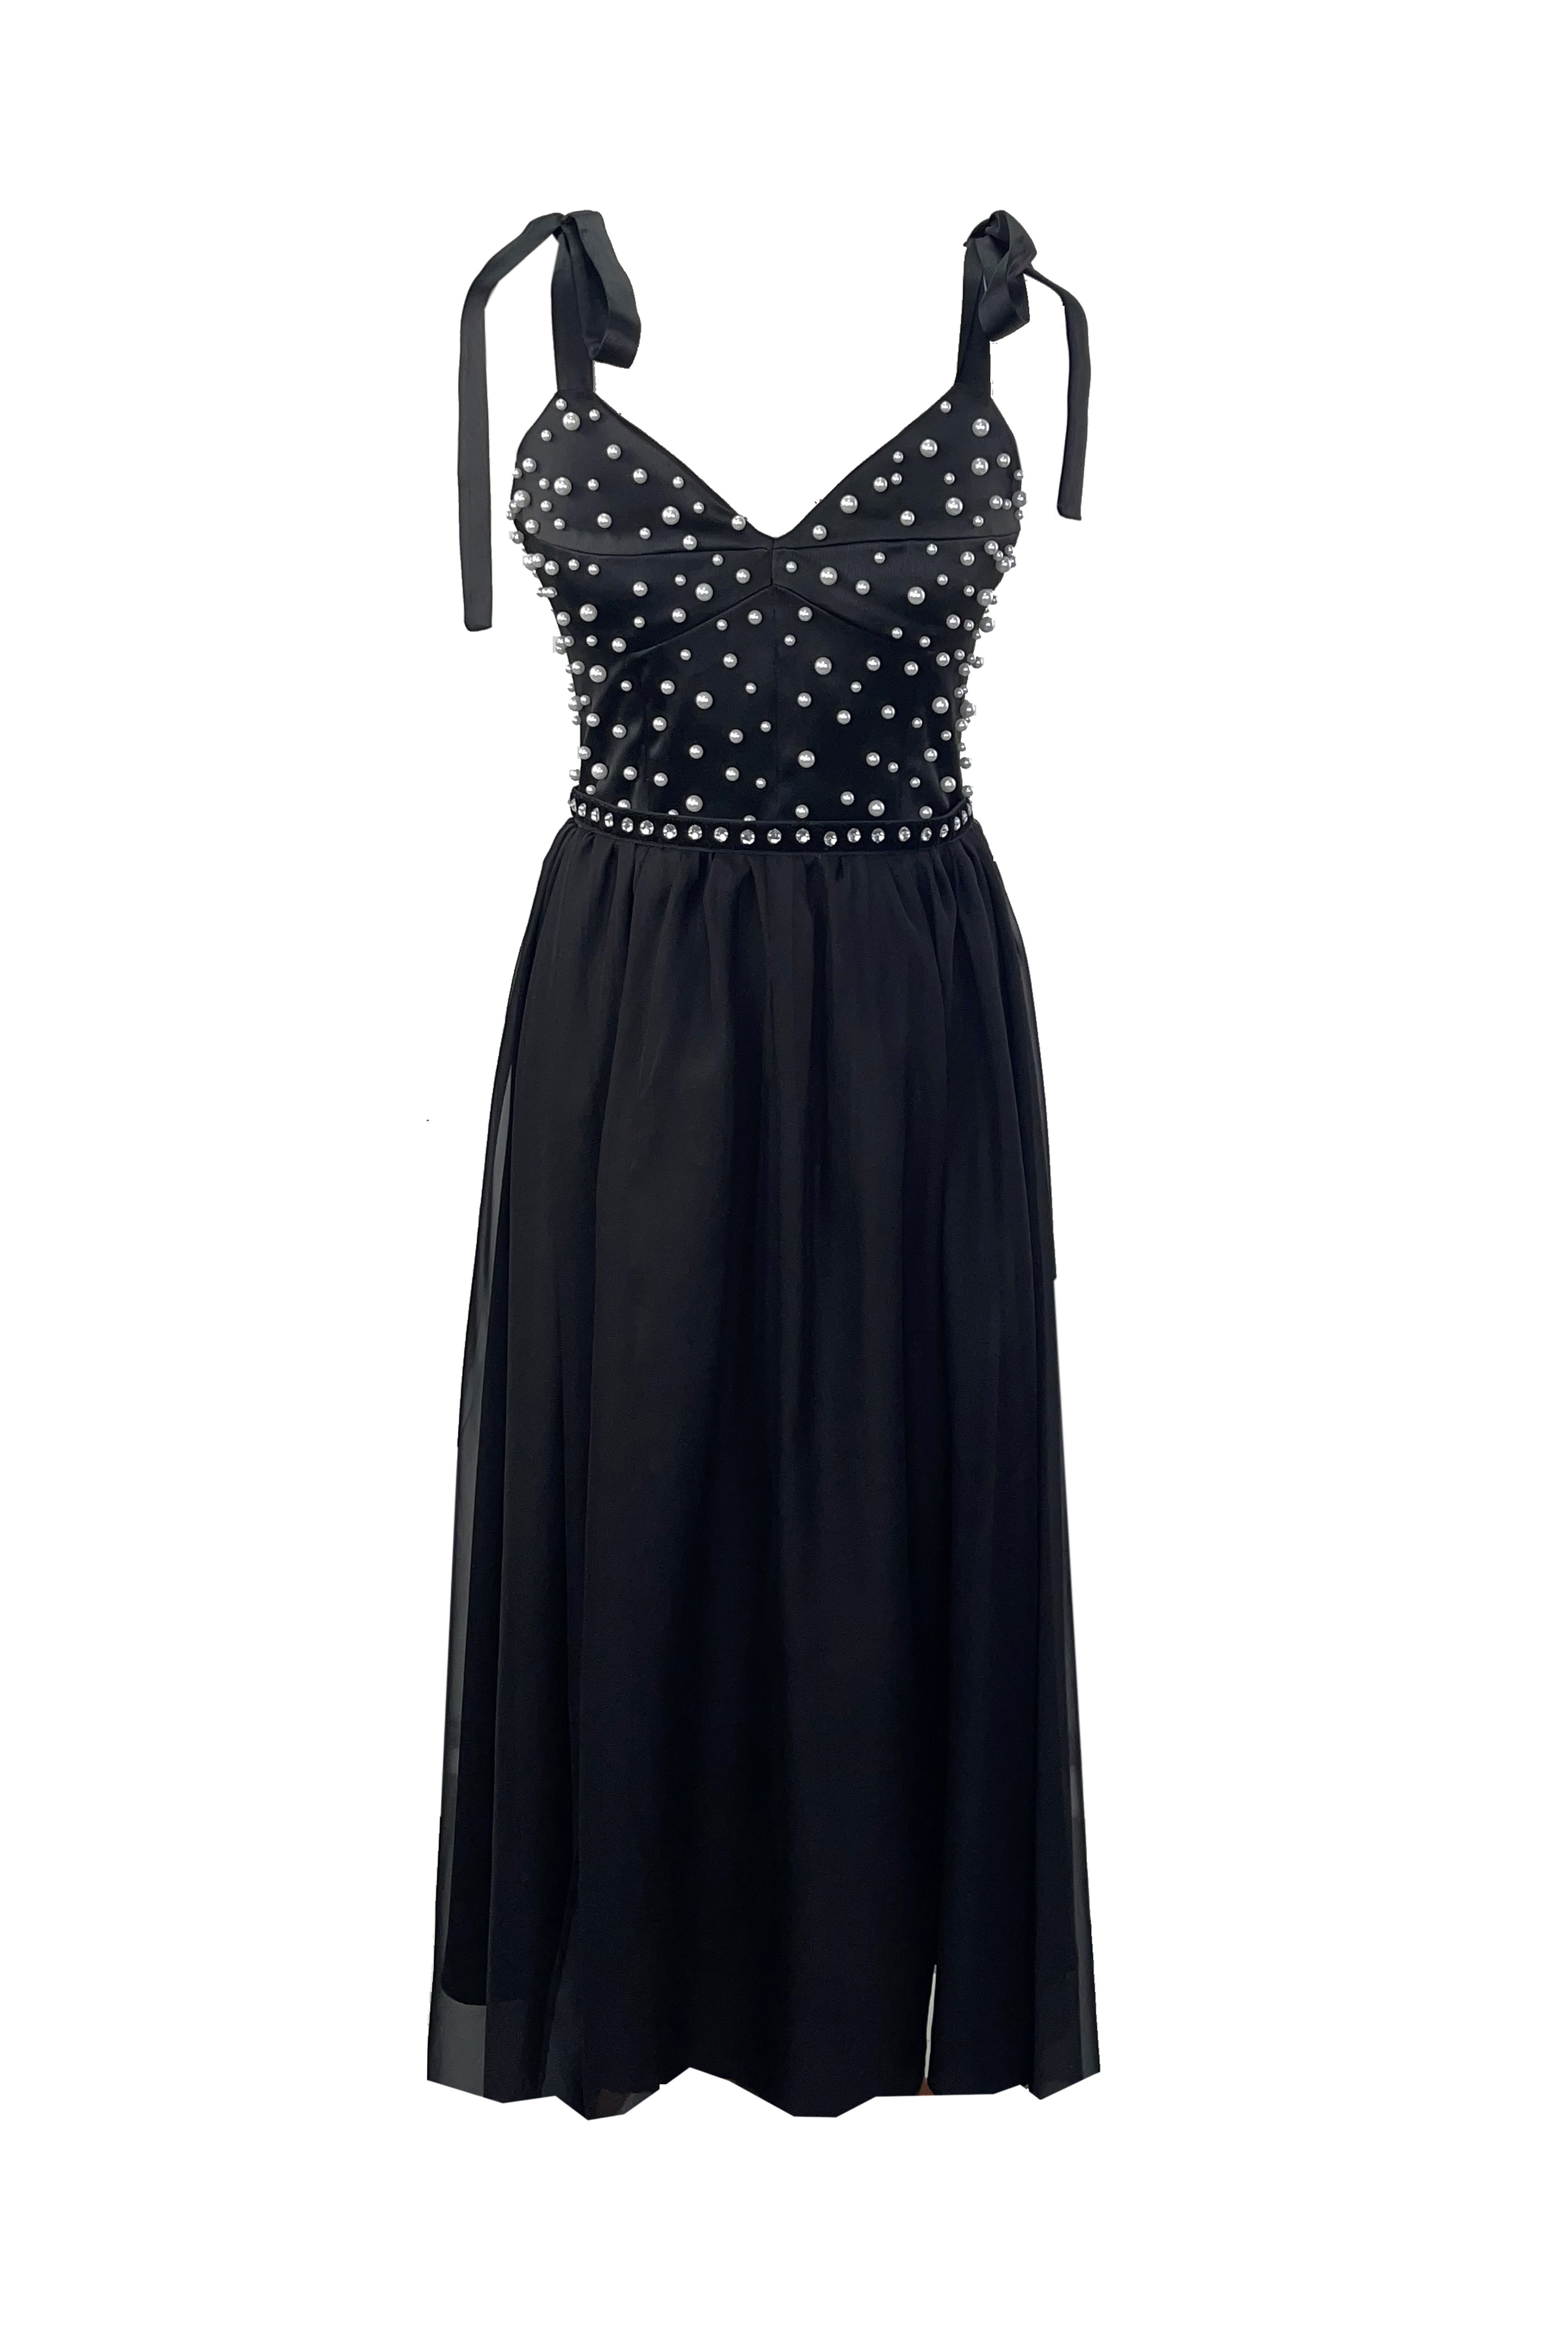 R24117 01 - LORRIA black silk evening midi dress with pearls